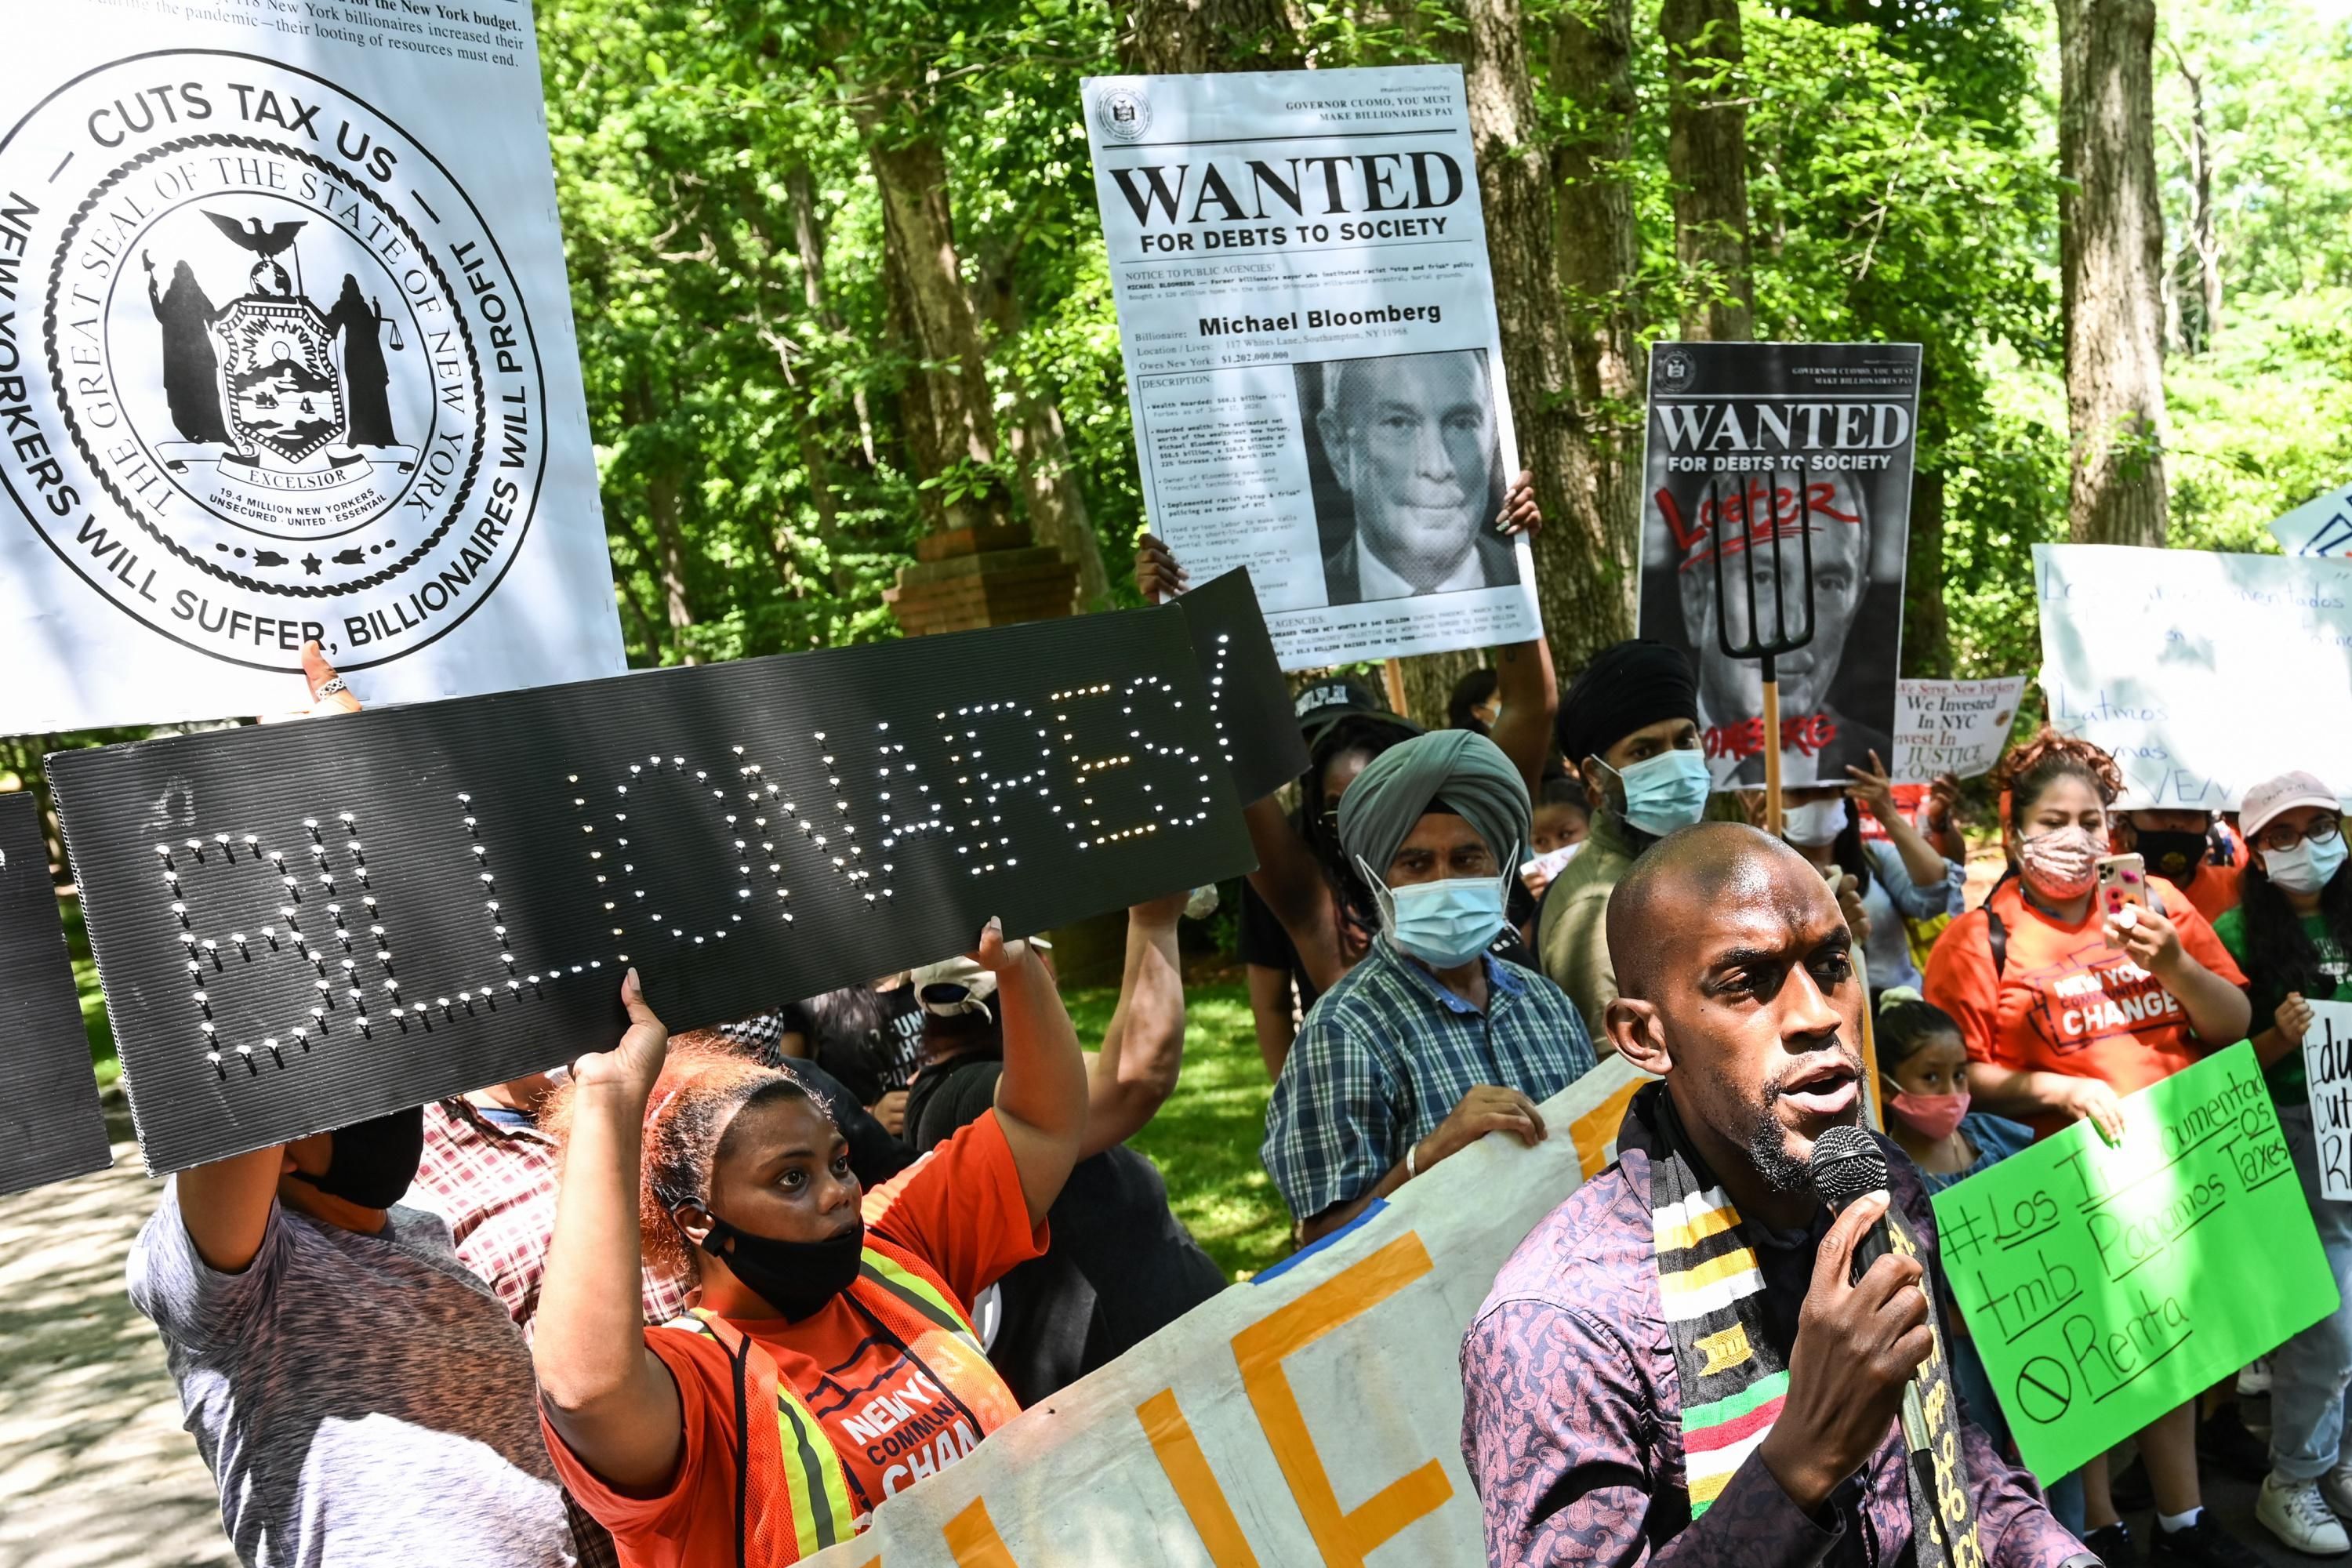 Demonstrators protest outside of Michael Bloomberg's home